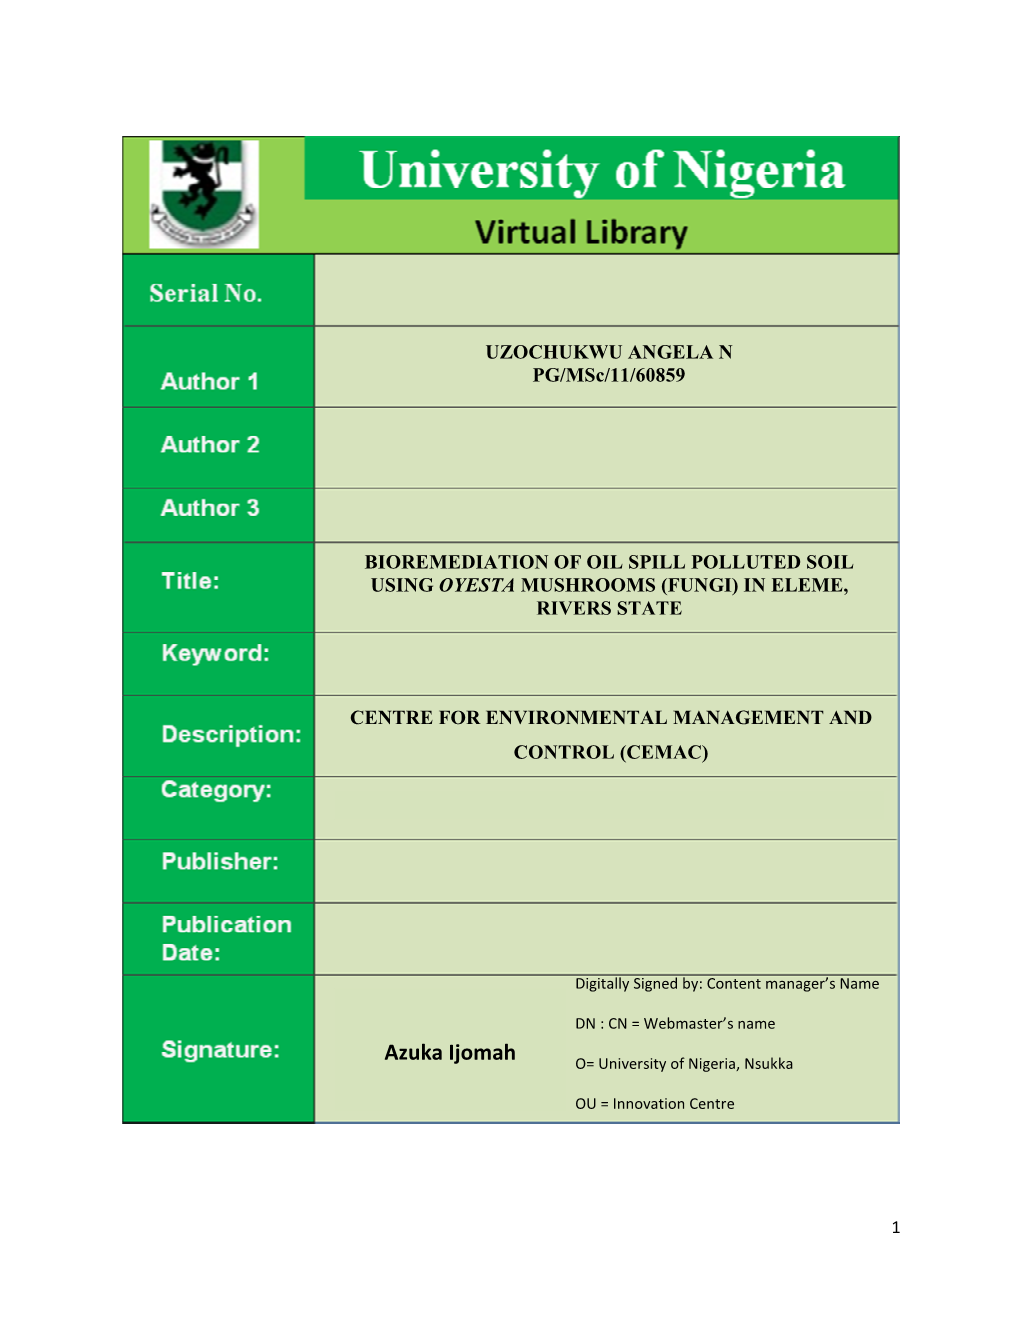 Azuka Ijomah O= University of Nigeria, Nsukka